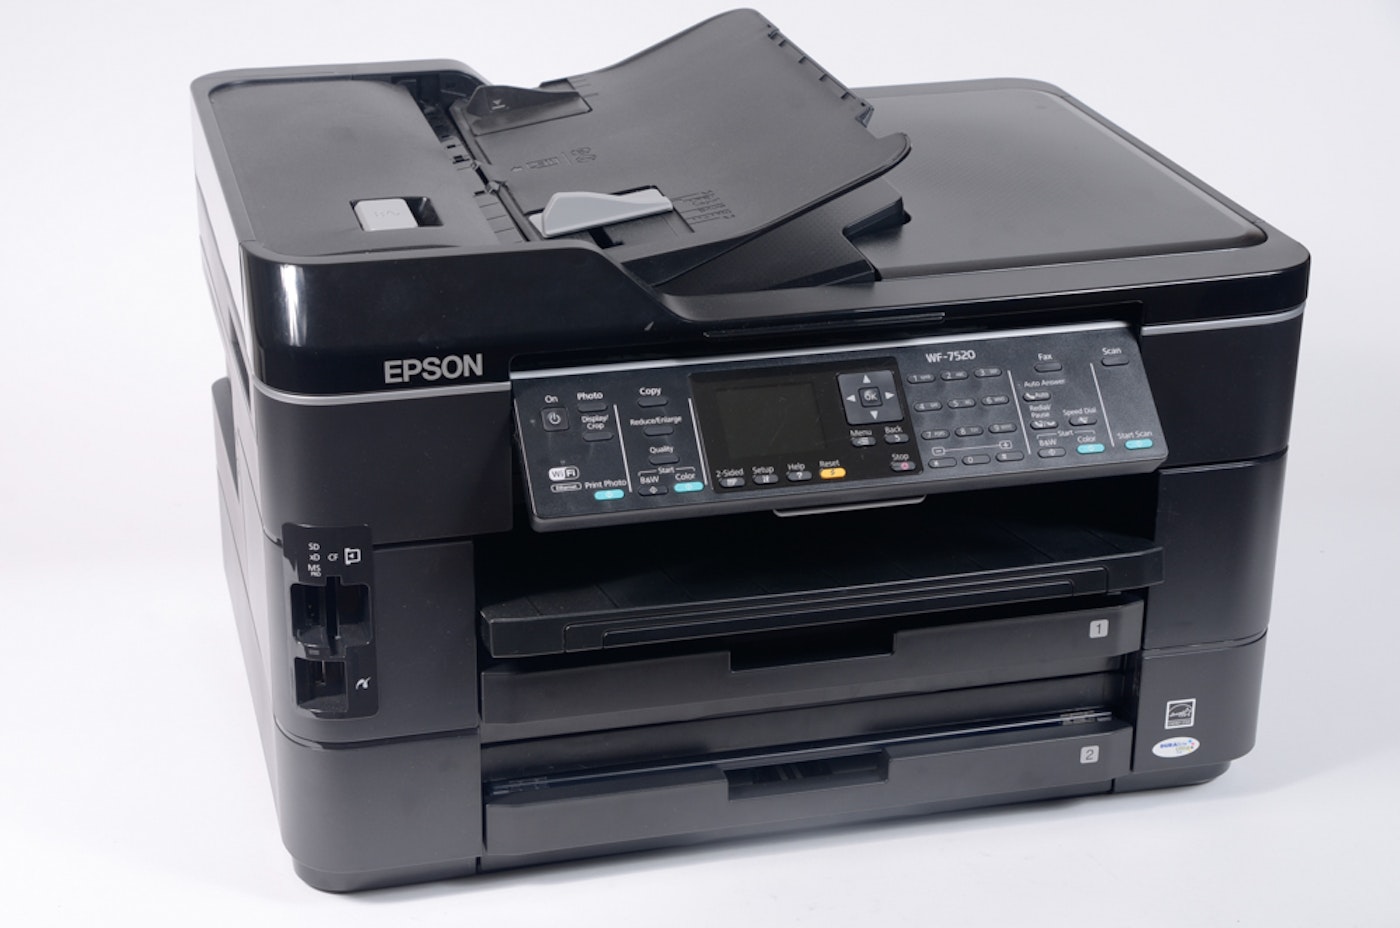 Epson Workforce Wf 7520 All In One Printer Ebth 0760